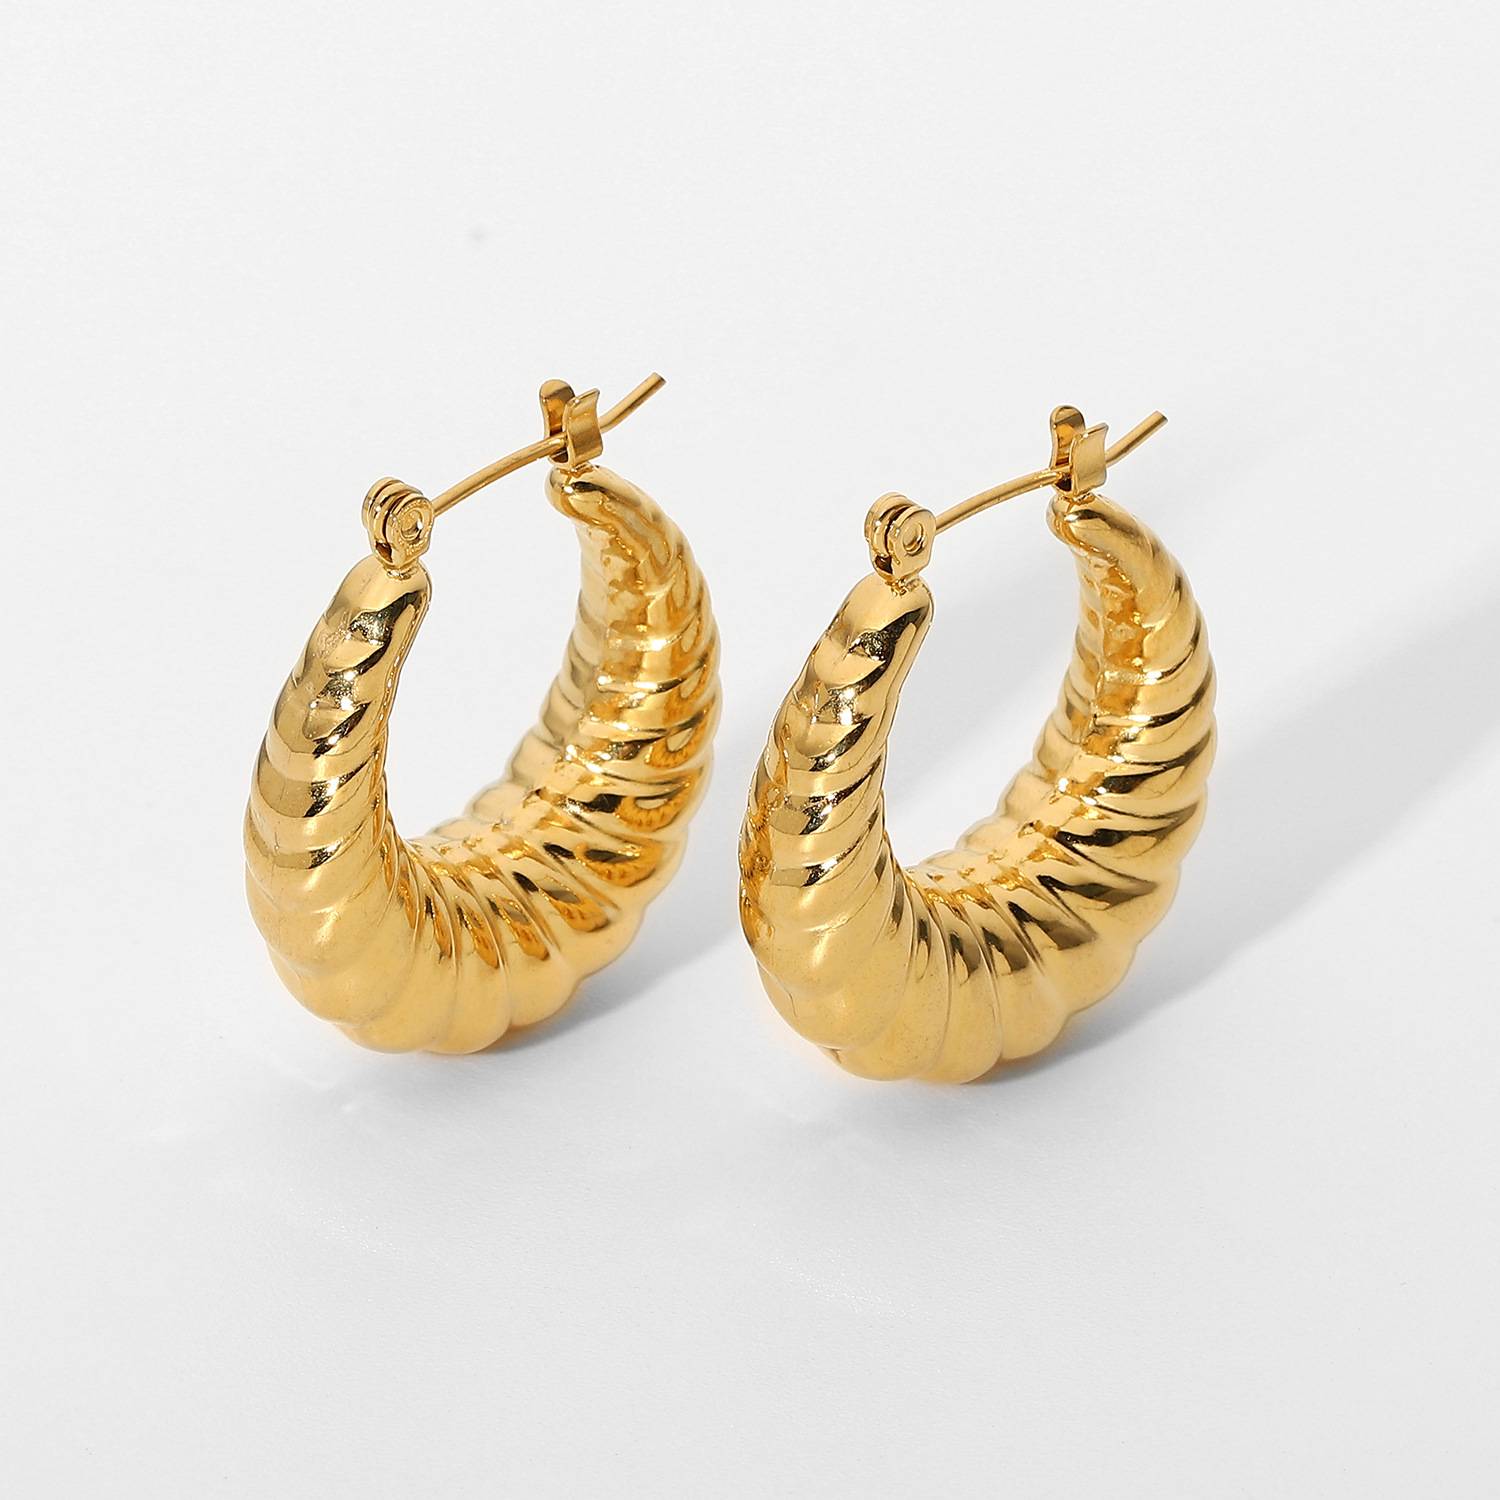 Fashion Luxury Stainless Steel Croissants Hoop Earrings Women 18K Gold Plated Round Shrimp Pattern Earrings Party Jewelry Gifts